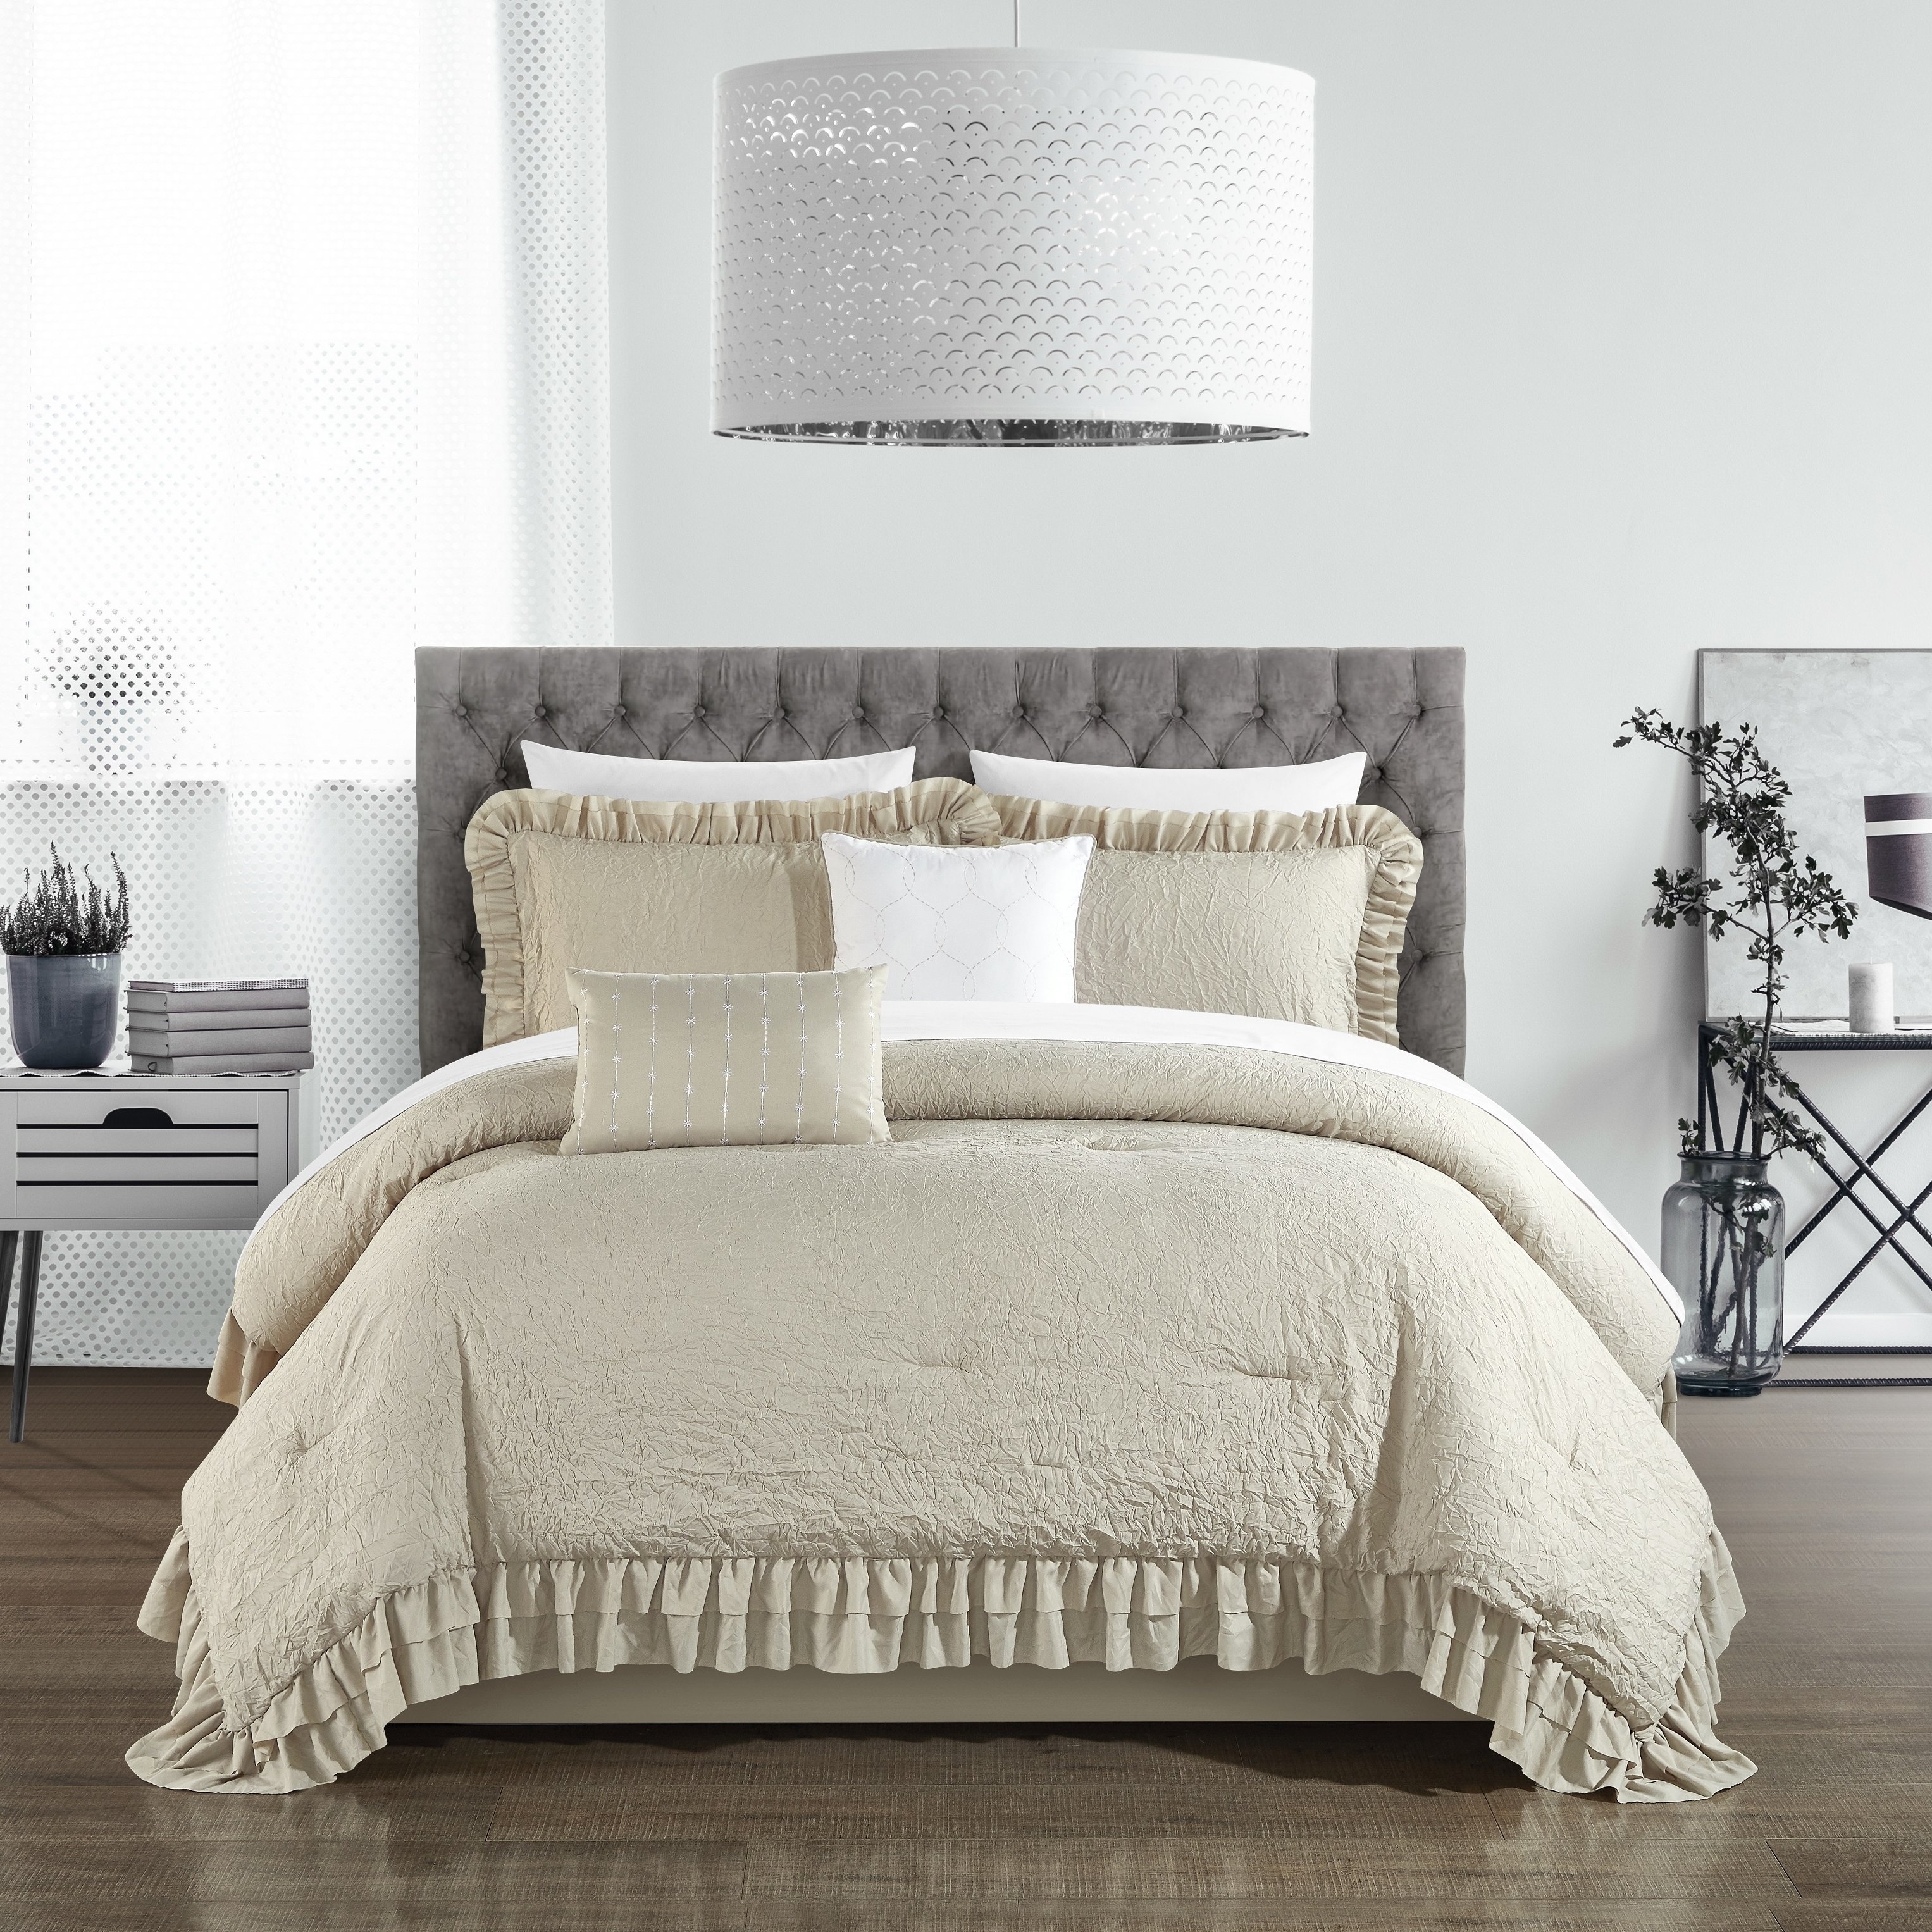 5 piece Kensley Comforter Set Washed Crinkle Ruffled Flange Border Design Bedding - Beige, Queen